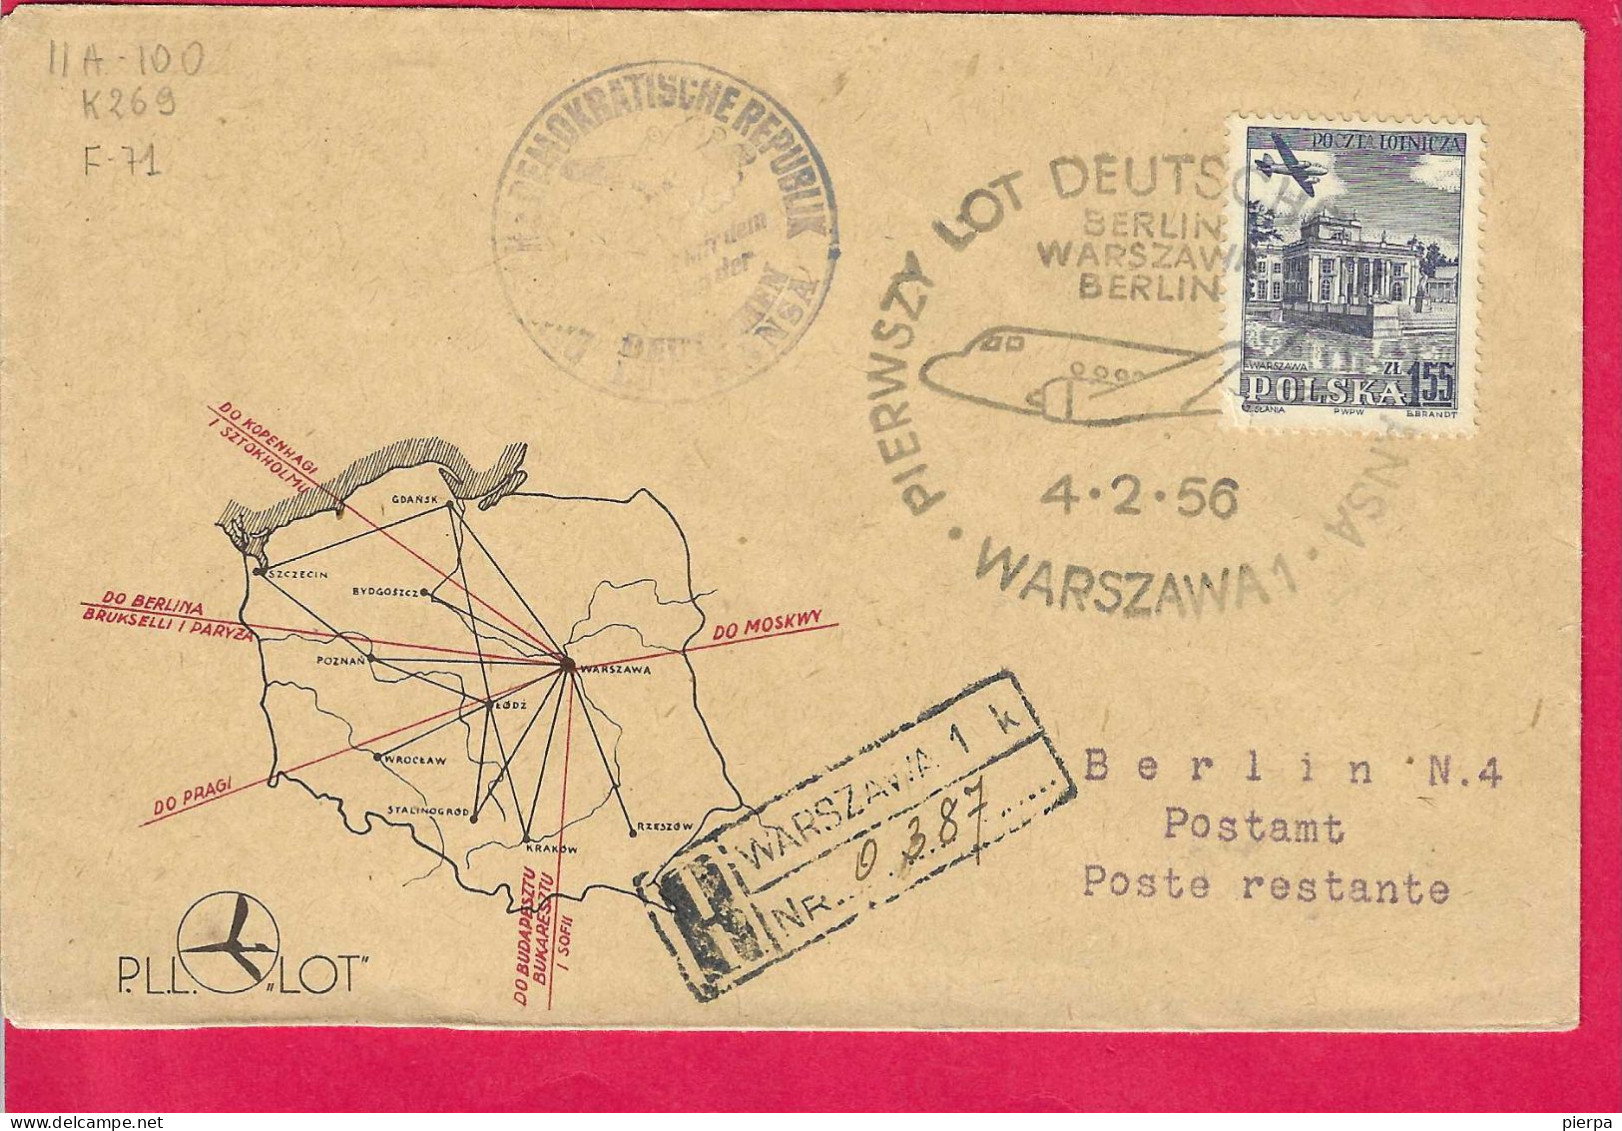 POLAND - LOT FLIGHT BERLIN/WARSZAWA/BERLIN *4.2.56* ON OFFICIAL COVER - Avions